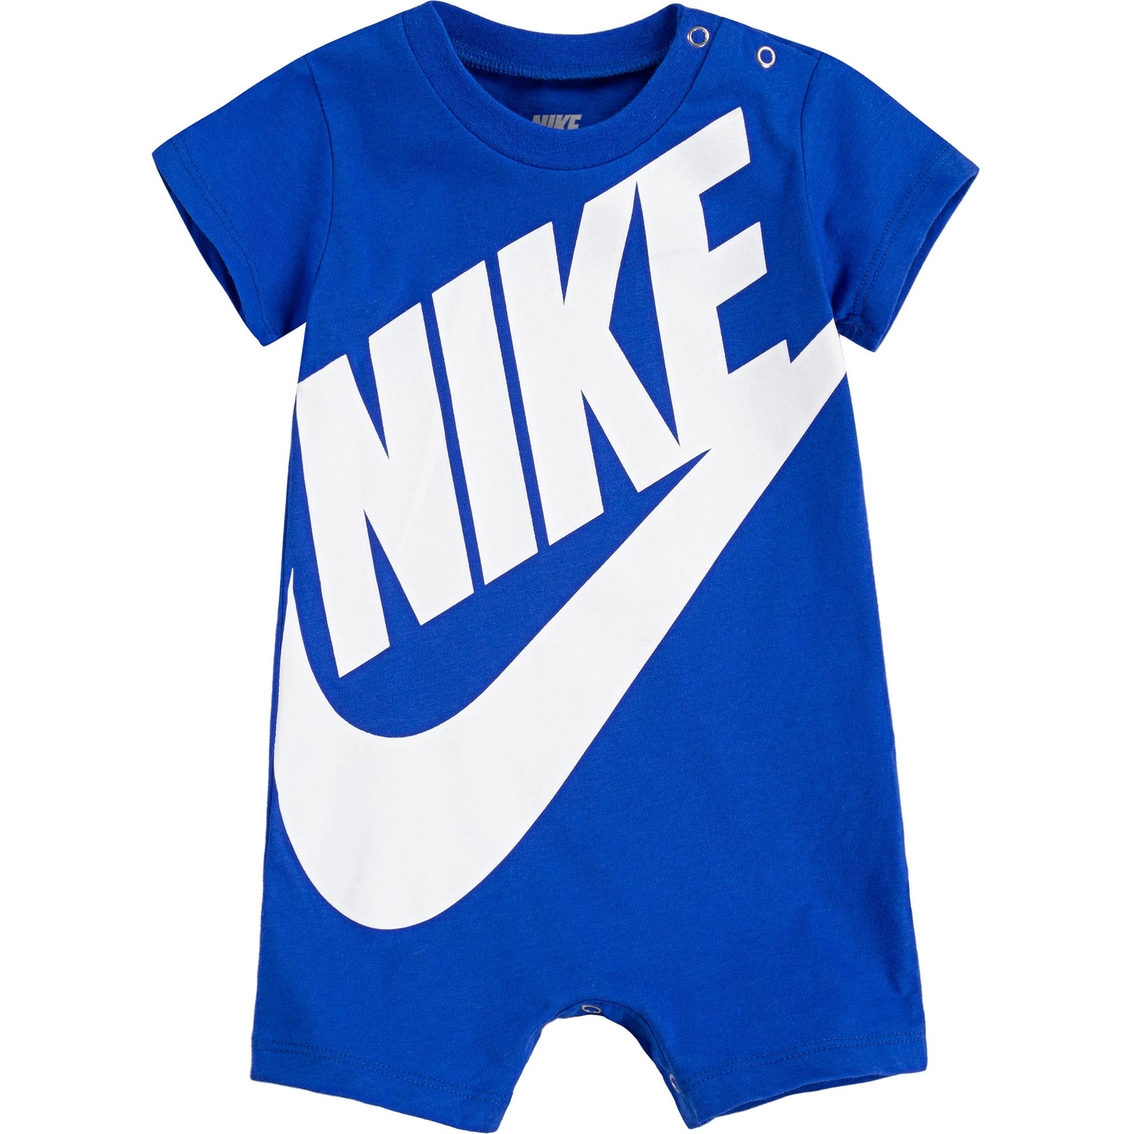 Nike Infant Boys Futura Romper | Baby Boy 0-24 Months | Clothing ...